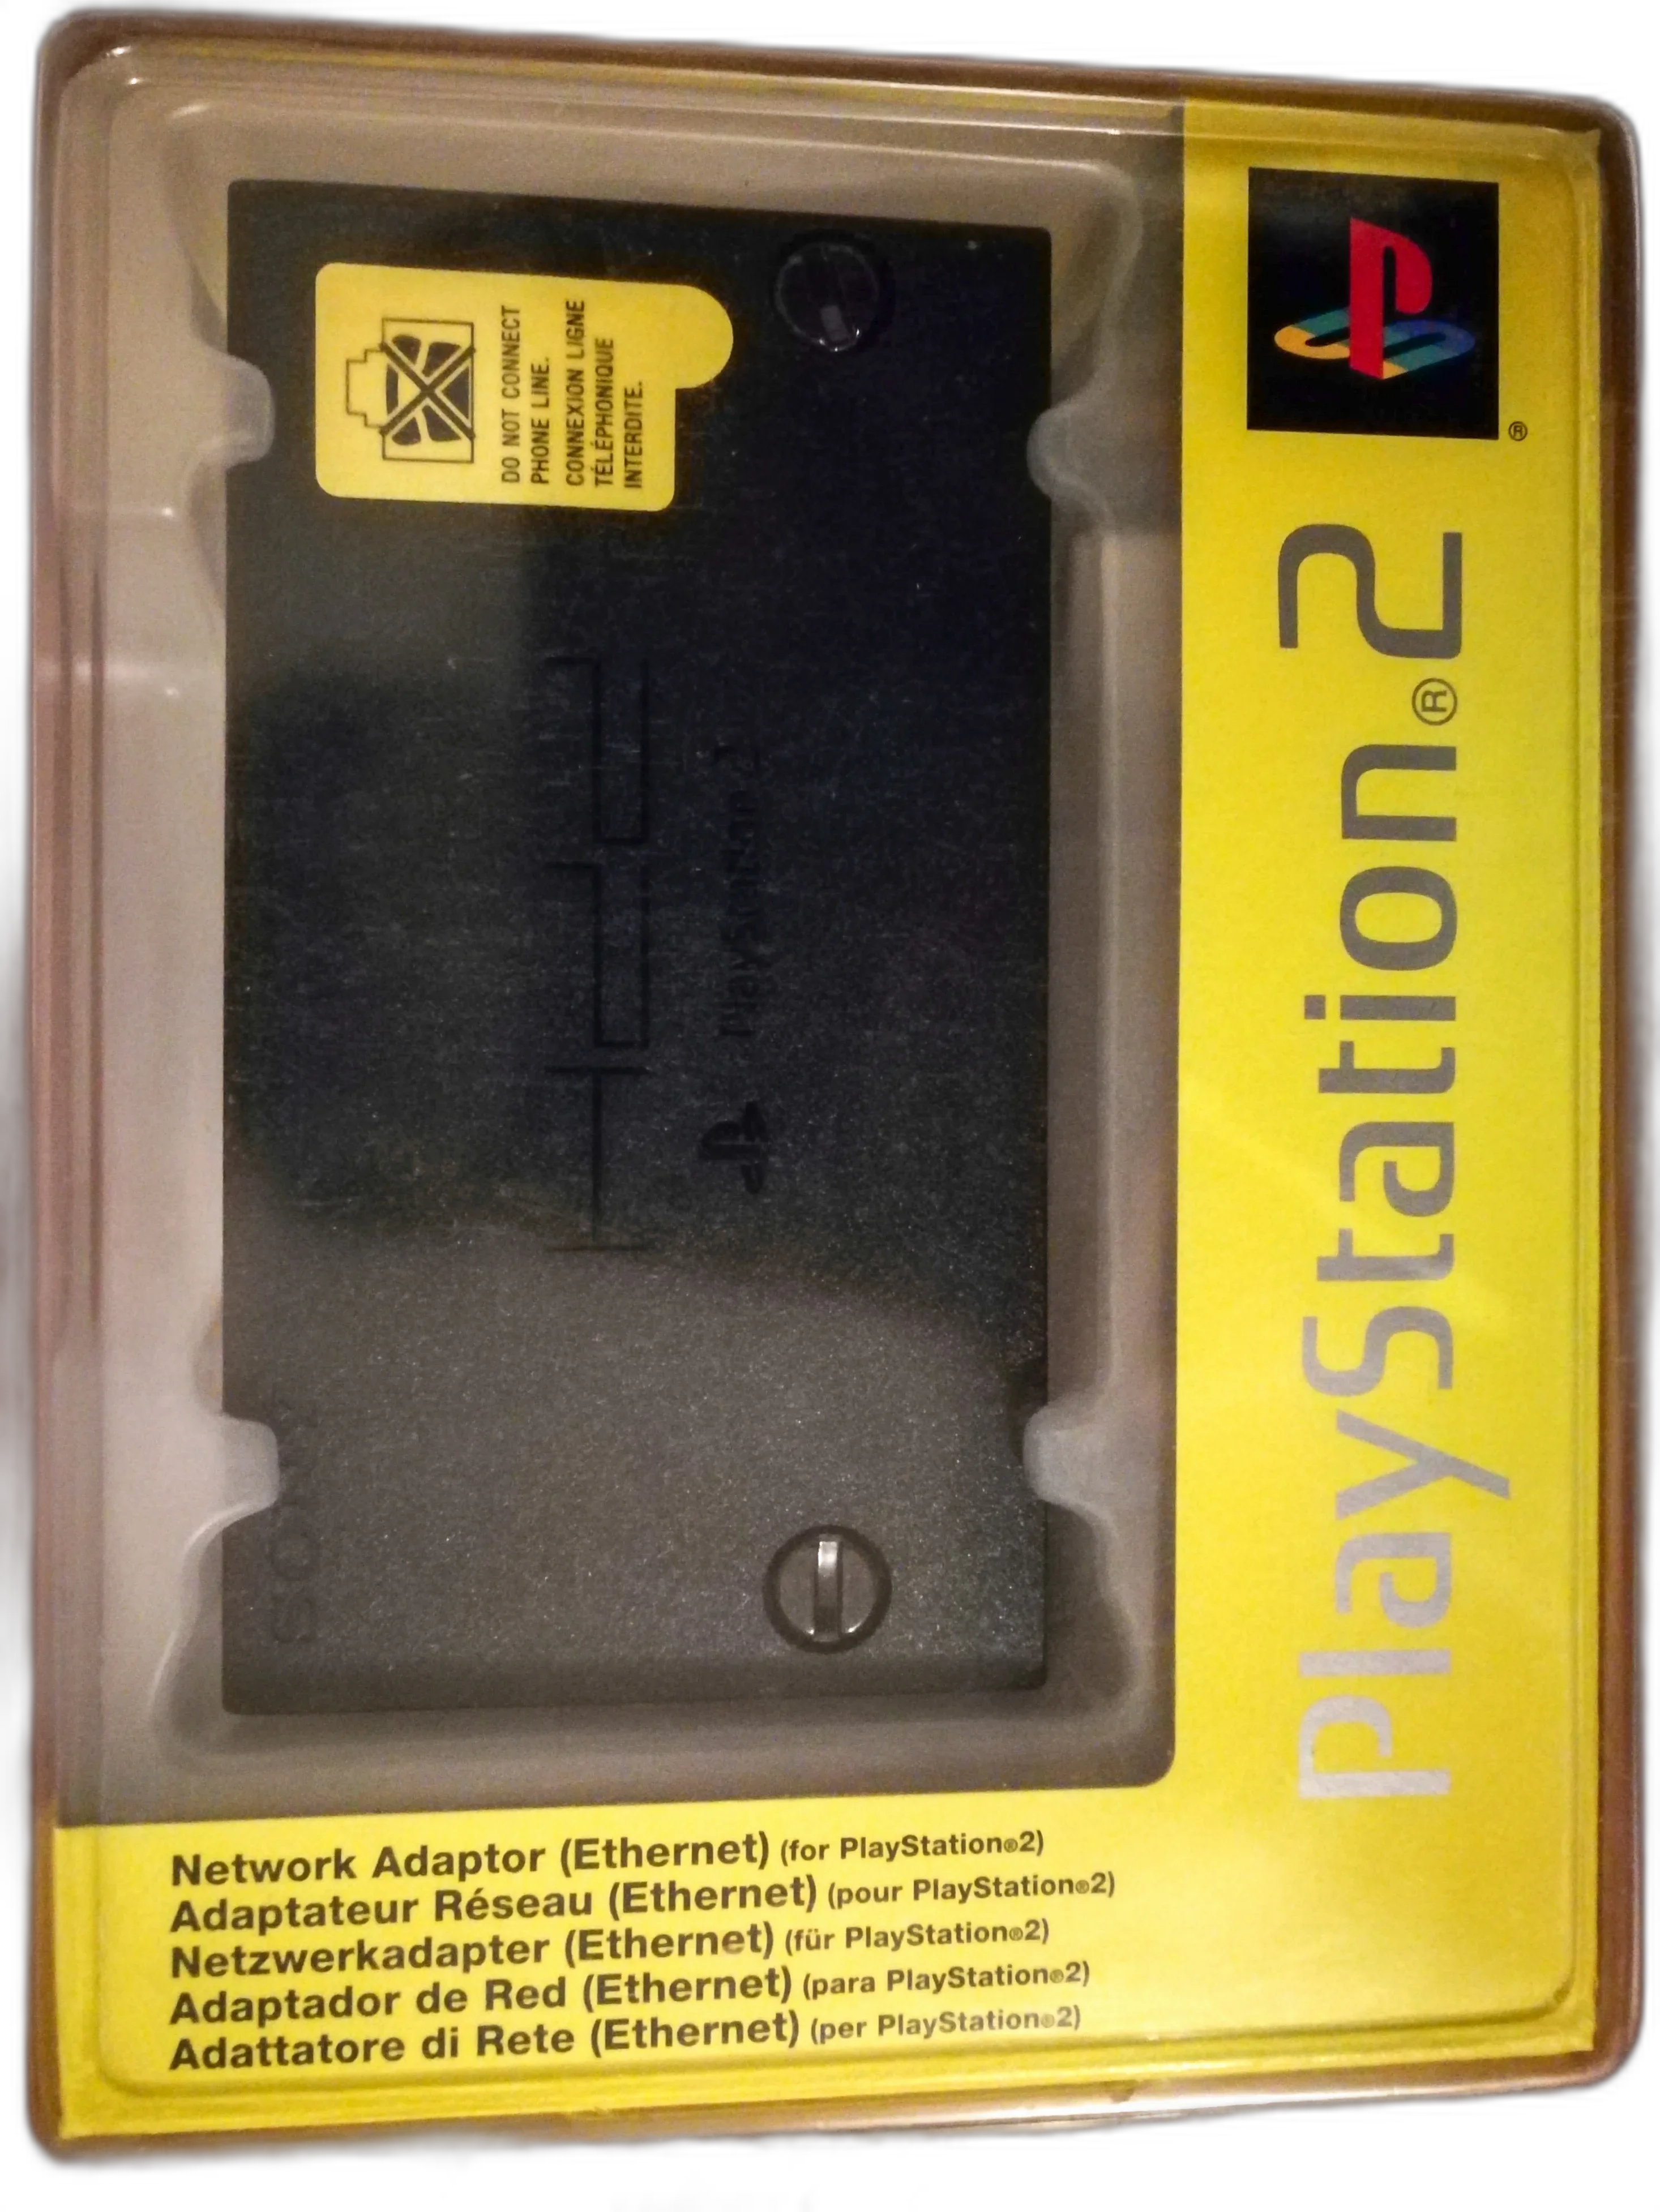  Sony PlayStation 2 Network Adaptor (Ethernet) [NA]